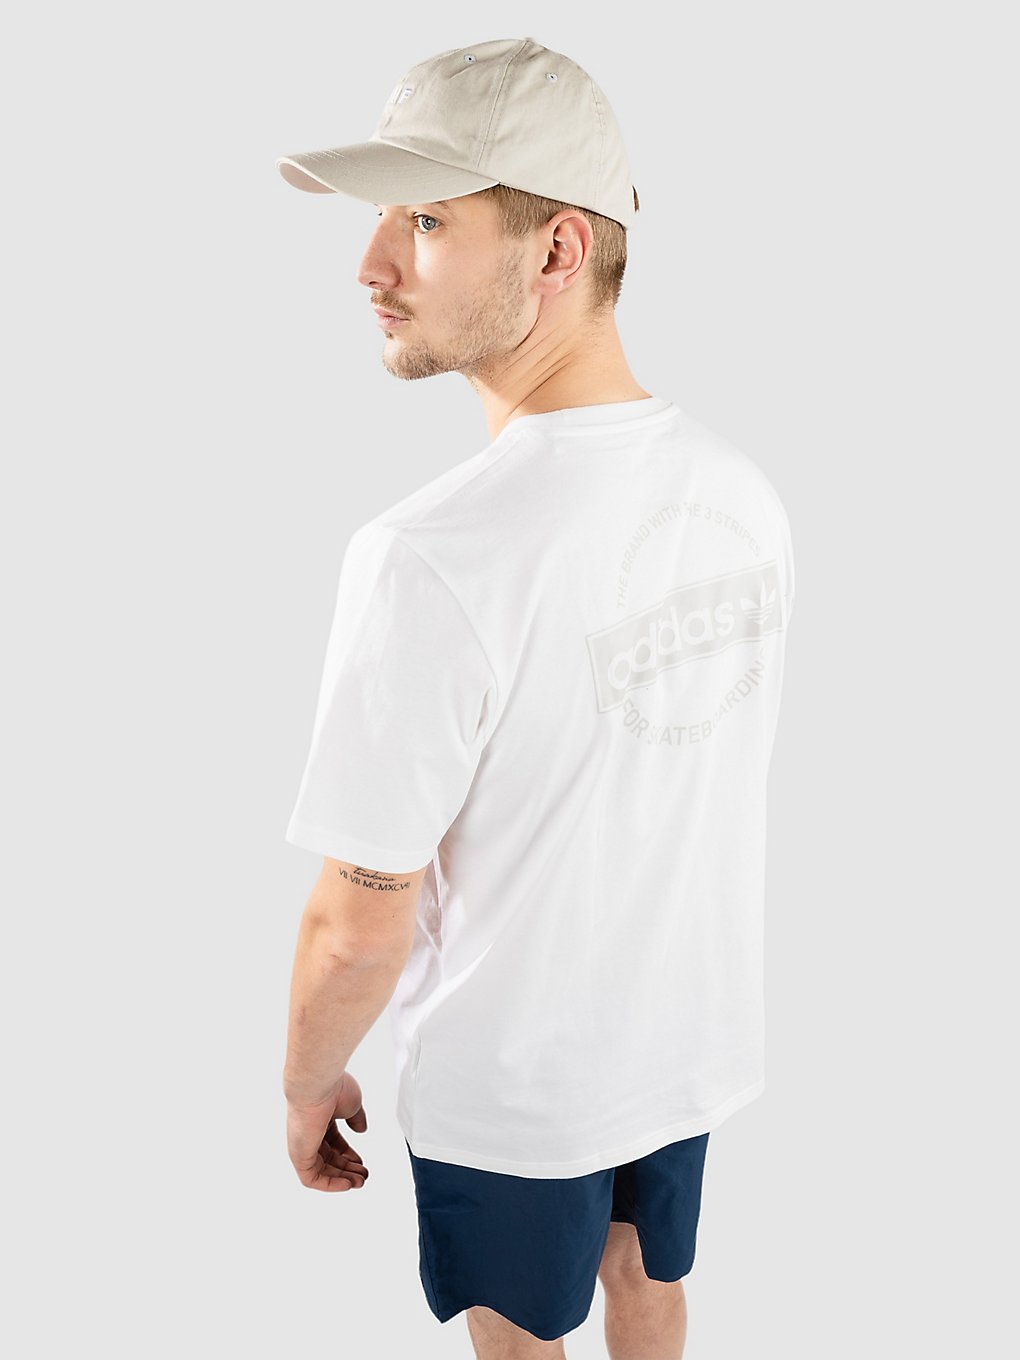 adidas Skateboarding 4.0 Circle T-Shirt greone kaufen